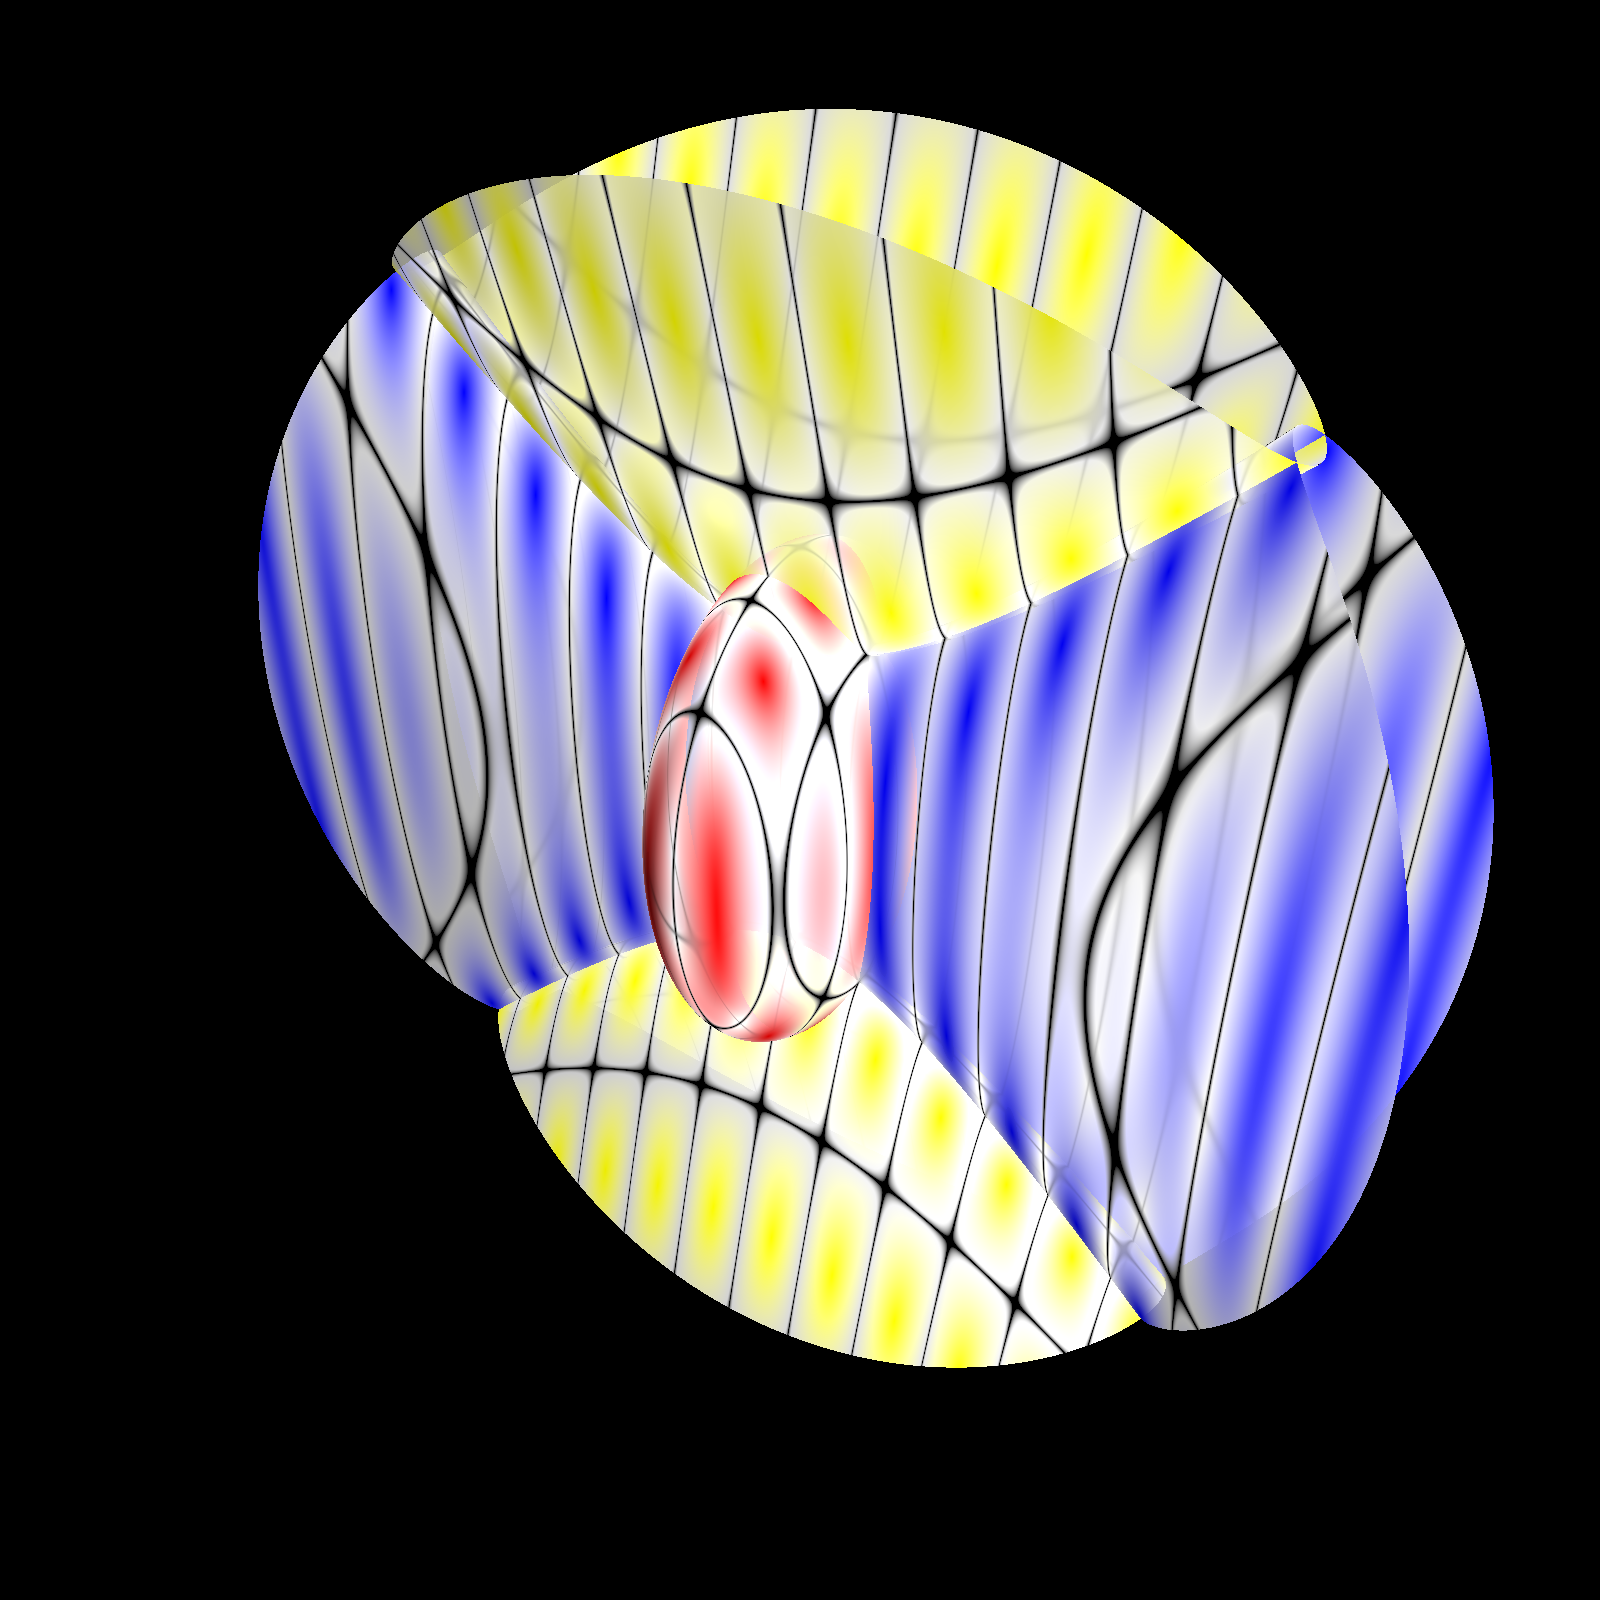 Coordinate surfaces of Jacobi's elliptic coordinates in 3 dimensions